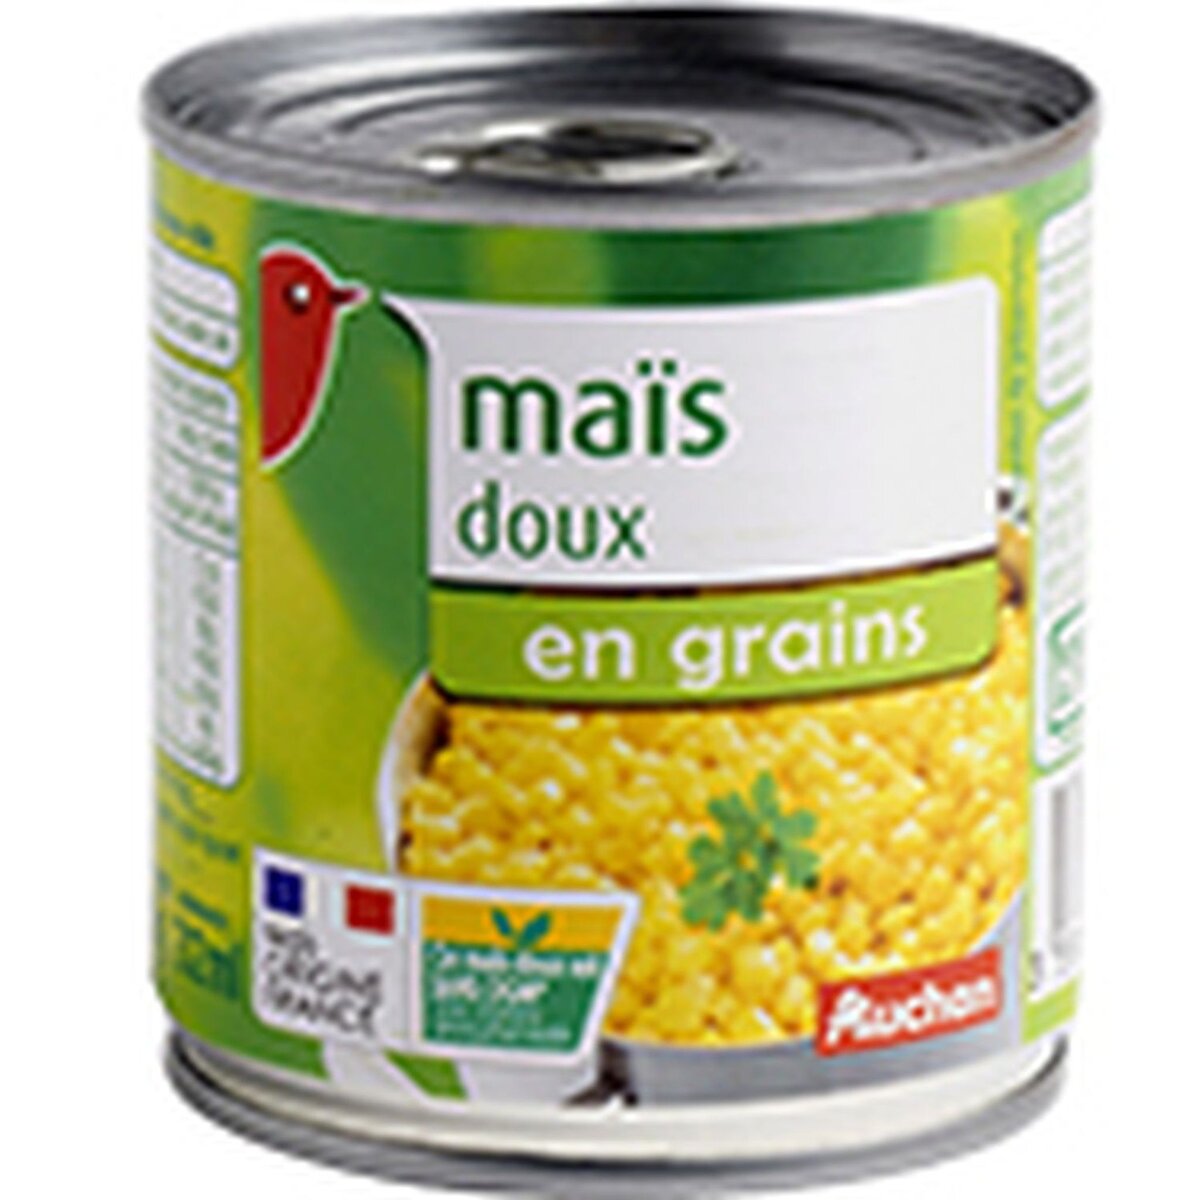 AUCHAN Auchan maïs doux en grains 140g